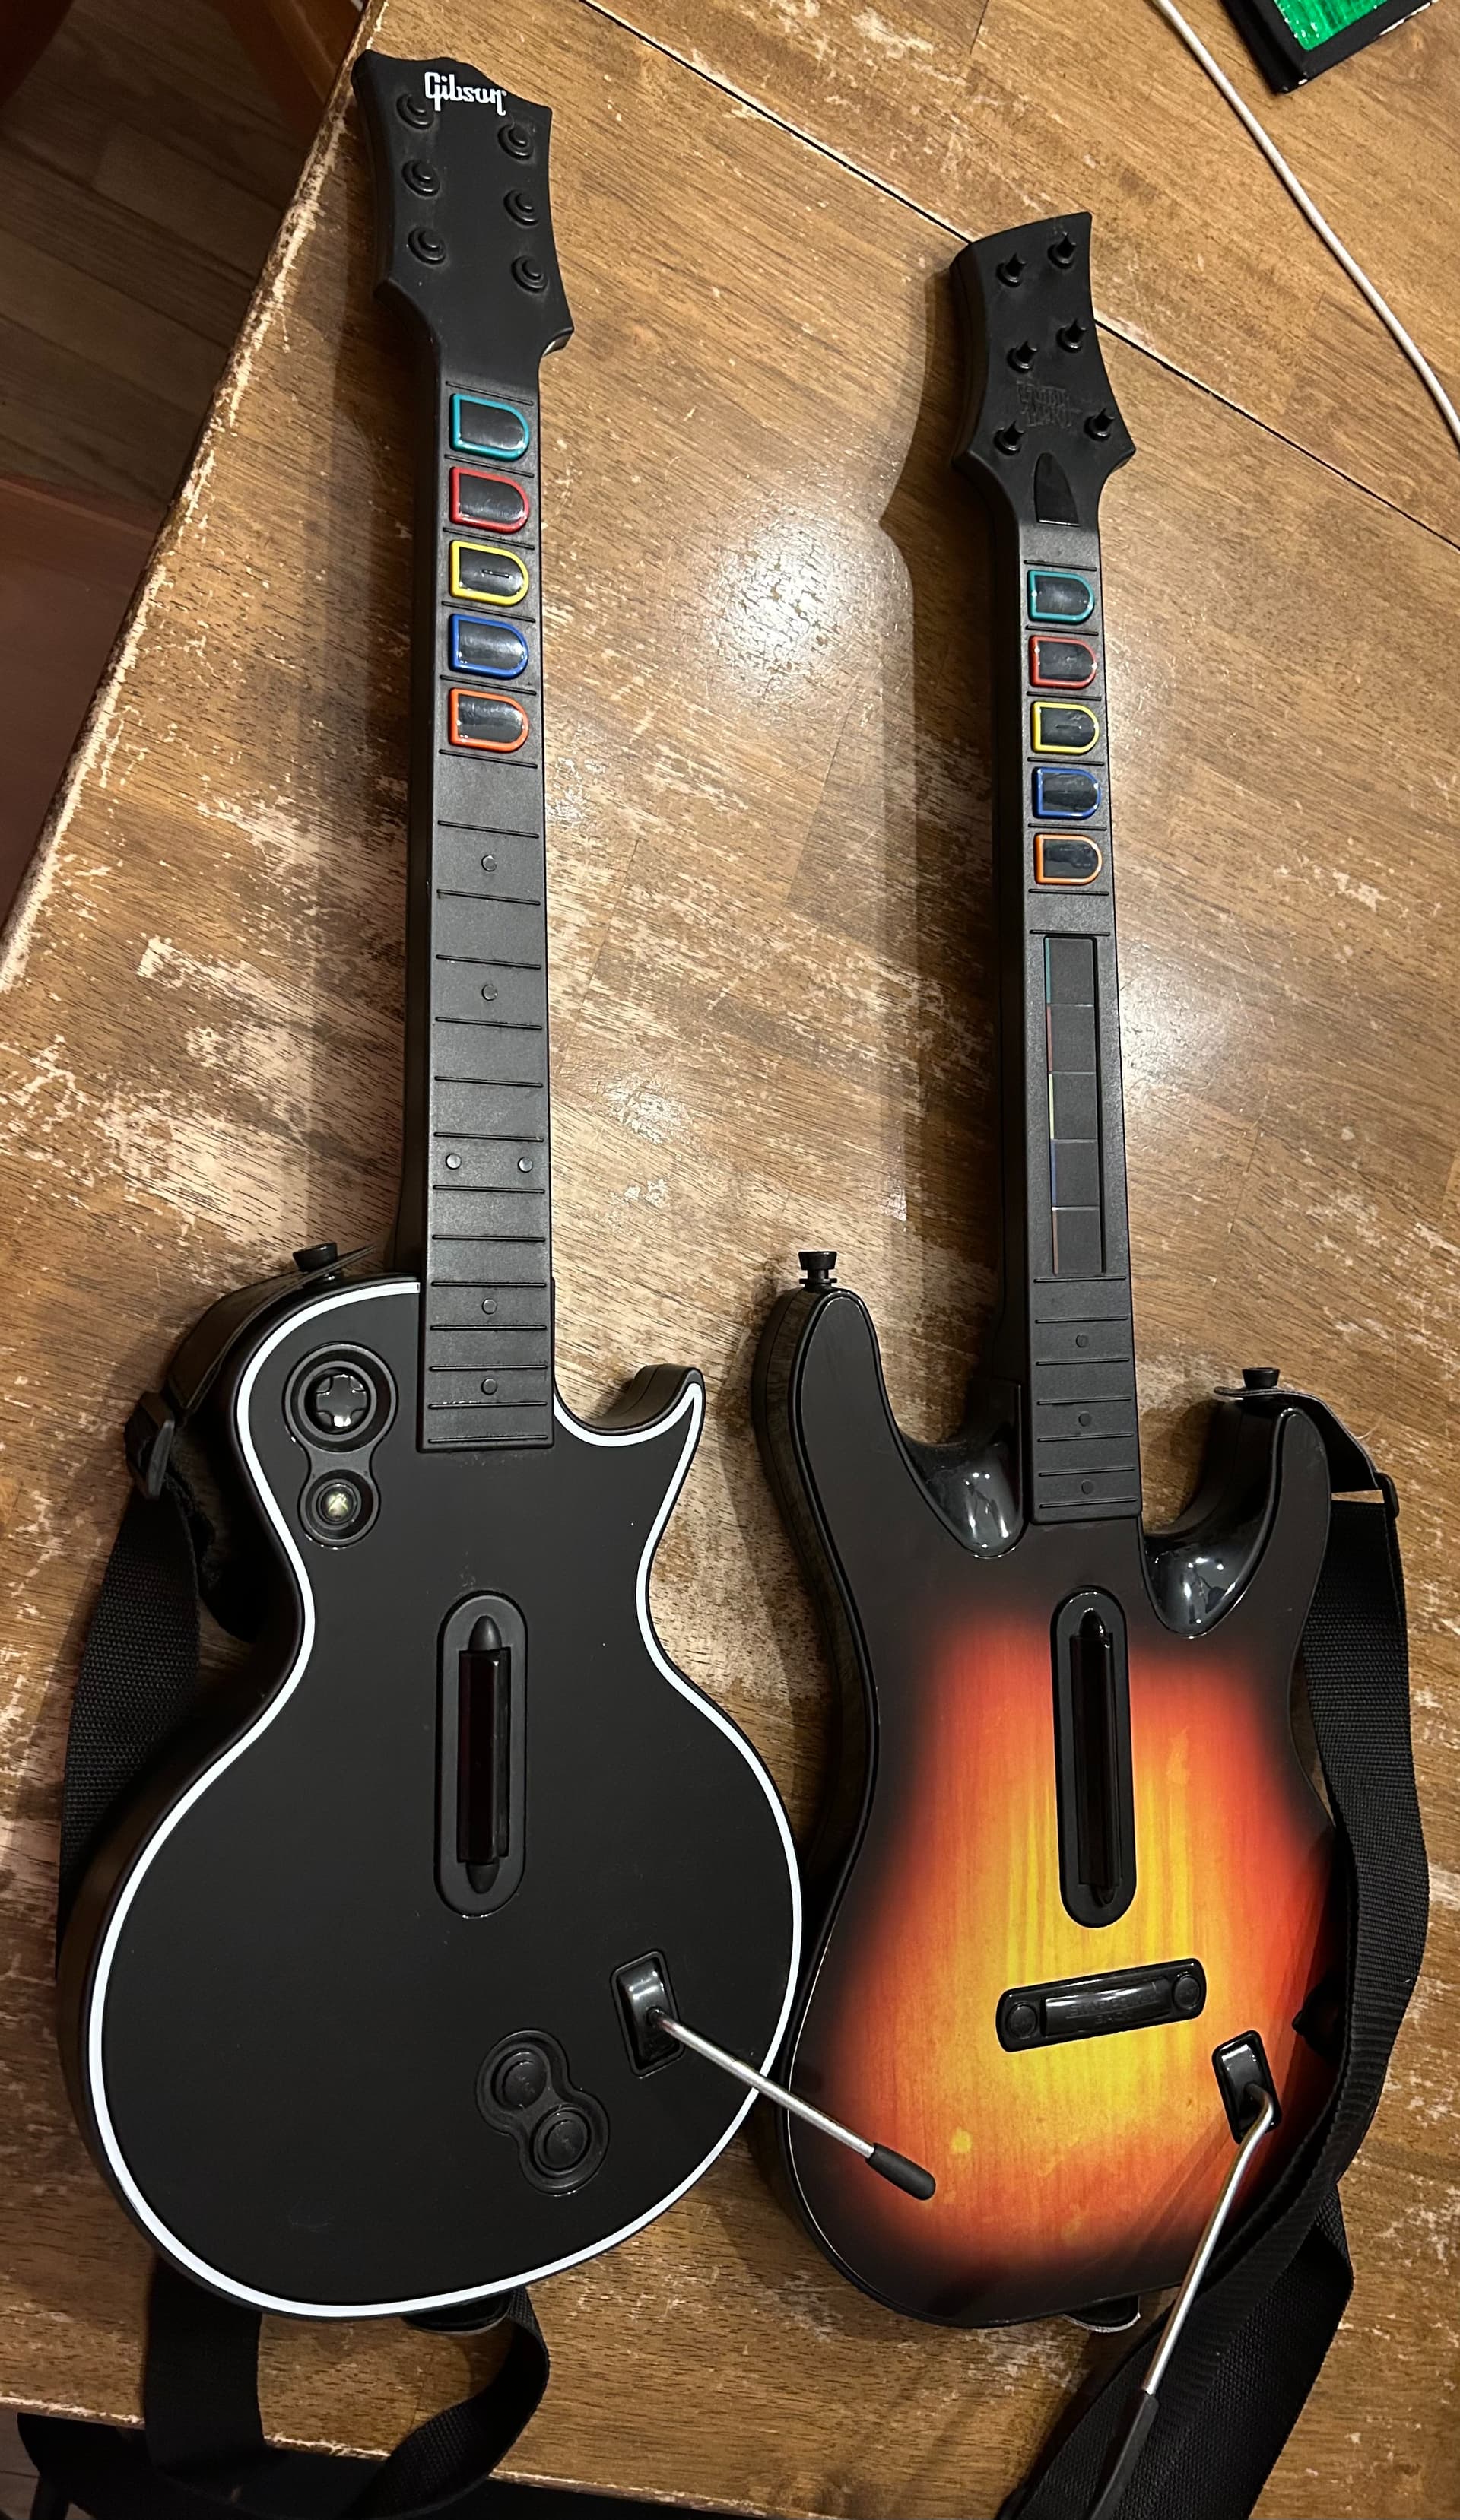 XBOX 360 Guitar Hero Controller..in 2023? - General Forum